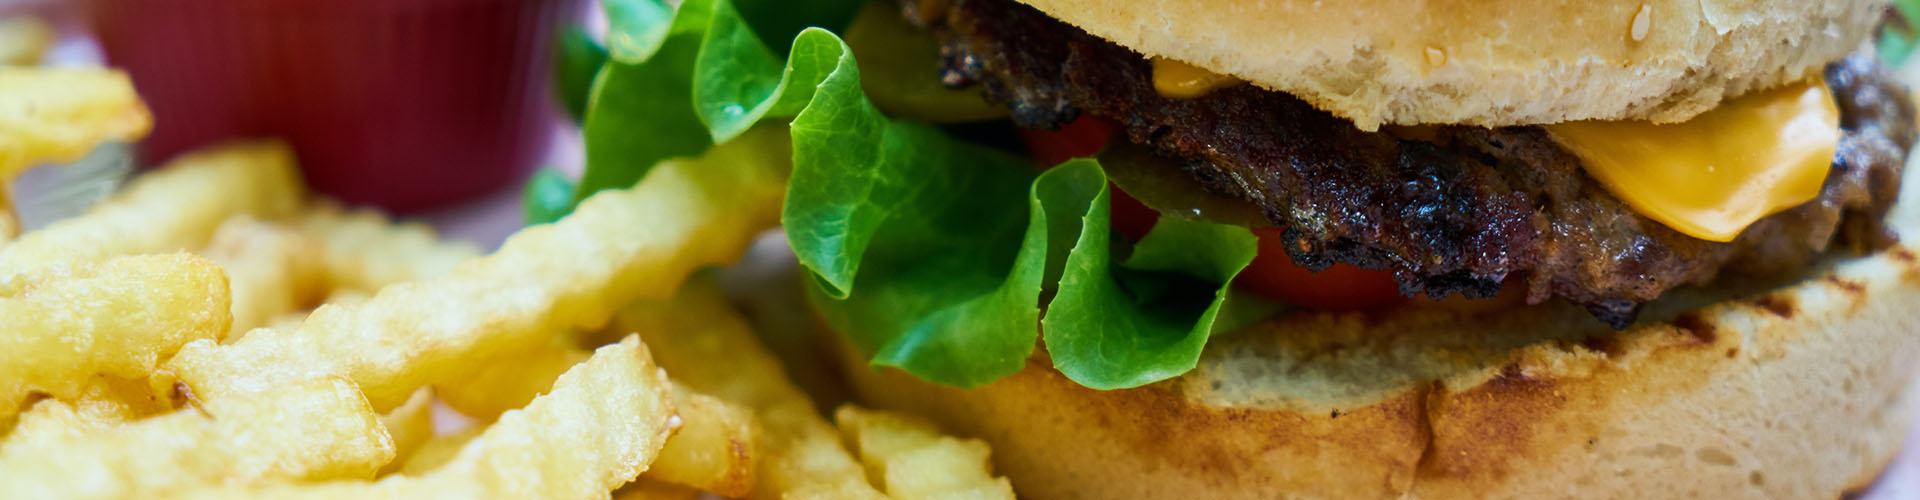 Burger and fries (pexels.com stock image)